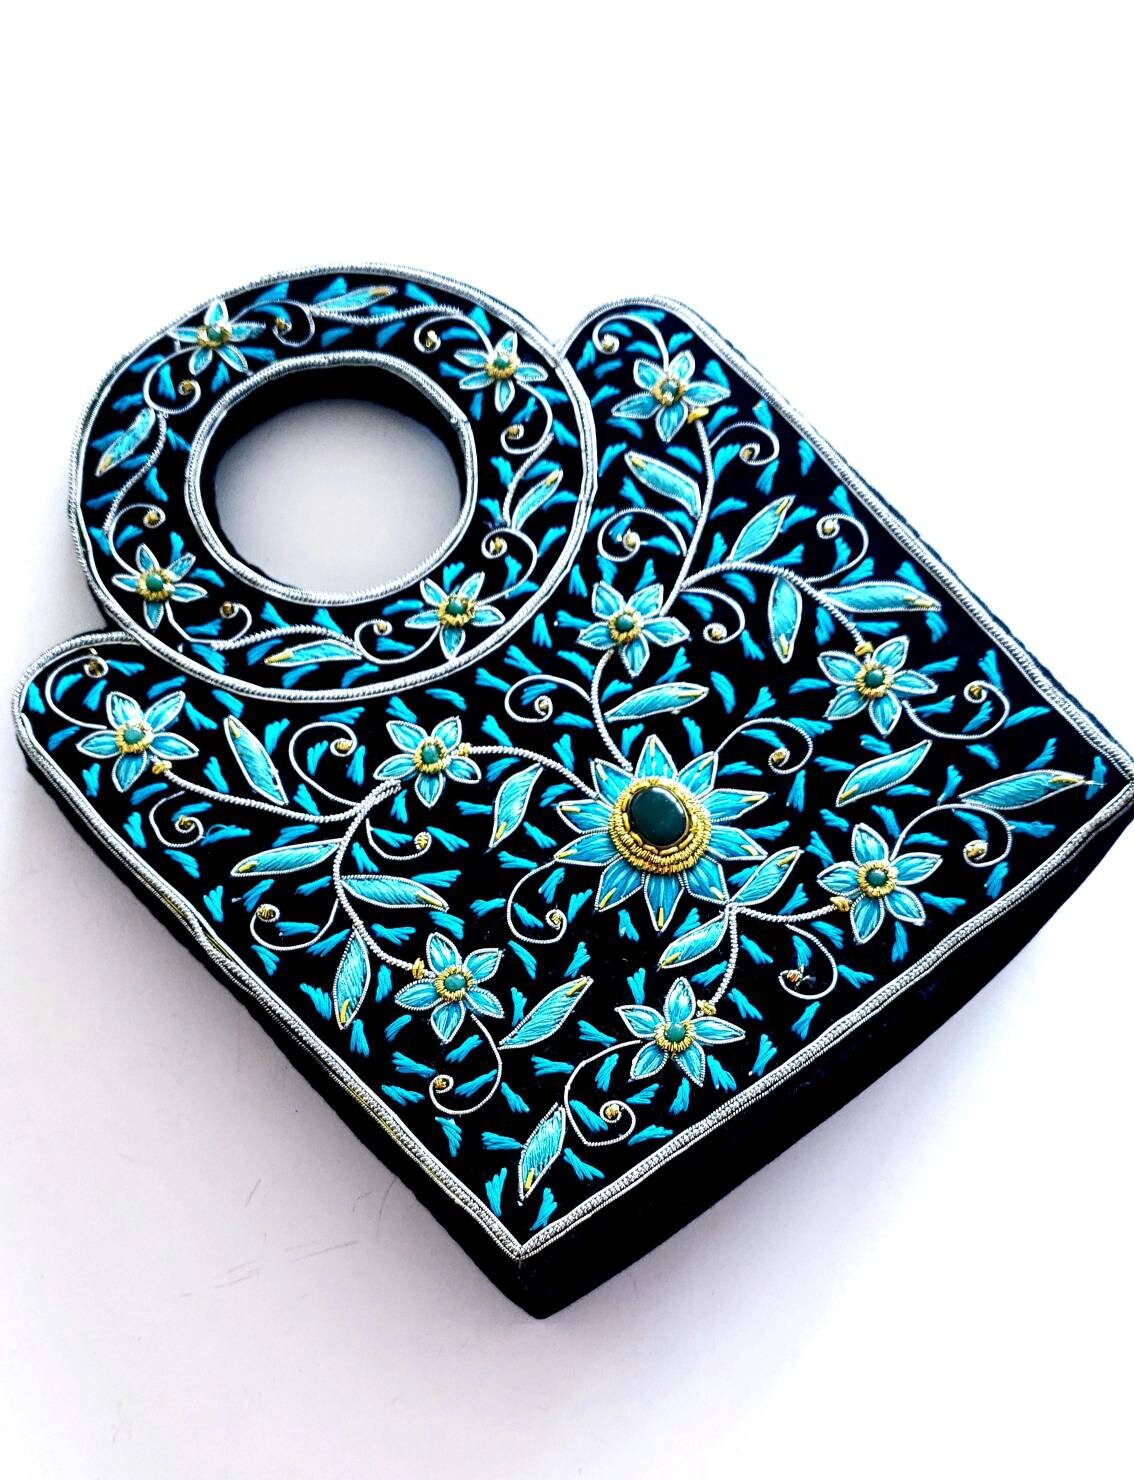 Turquoise bracelet handbag OOAK statement blue handbag jewel | Etsy